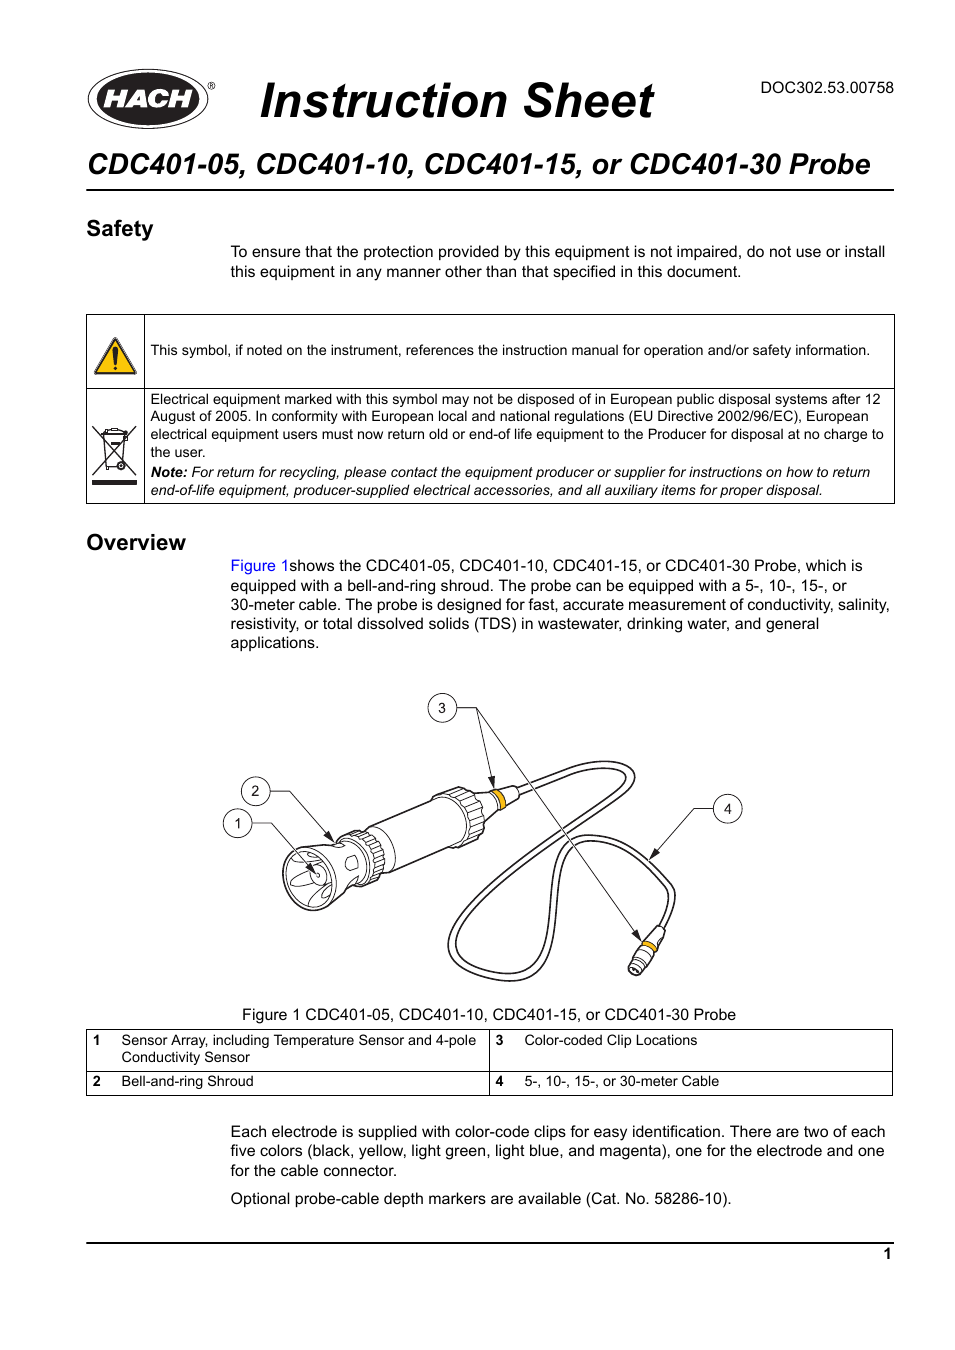 CDC401-15 Instruction Sheet